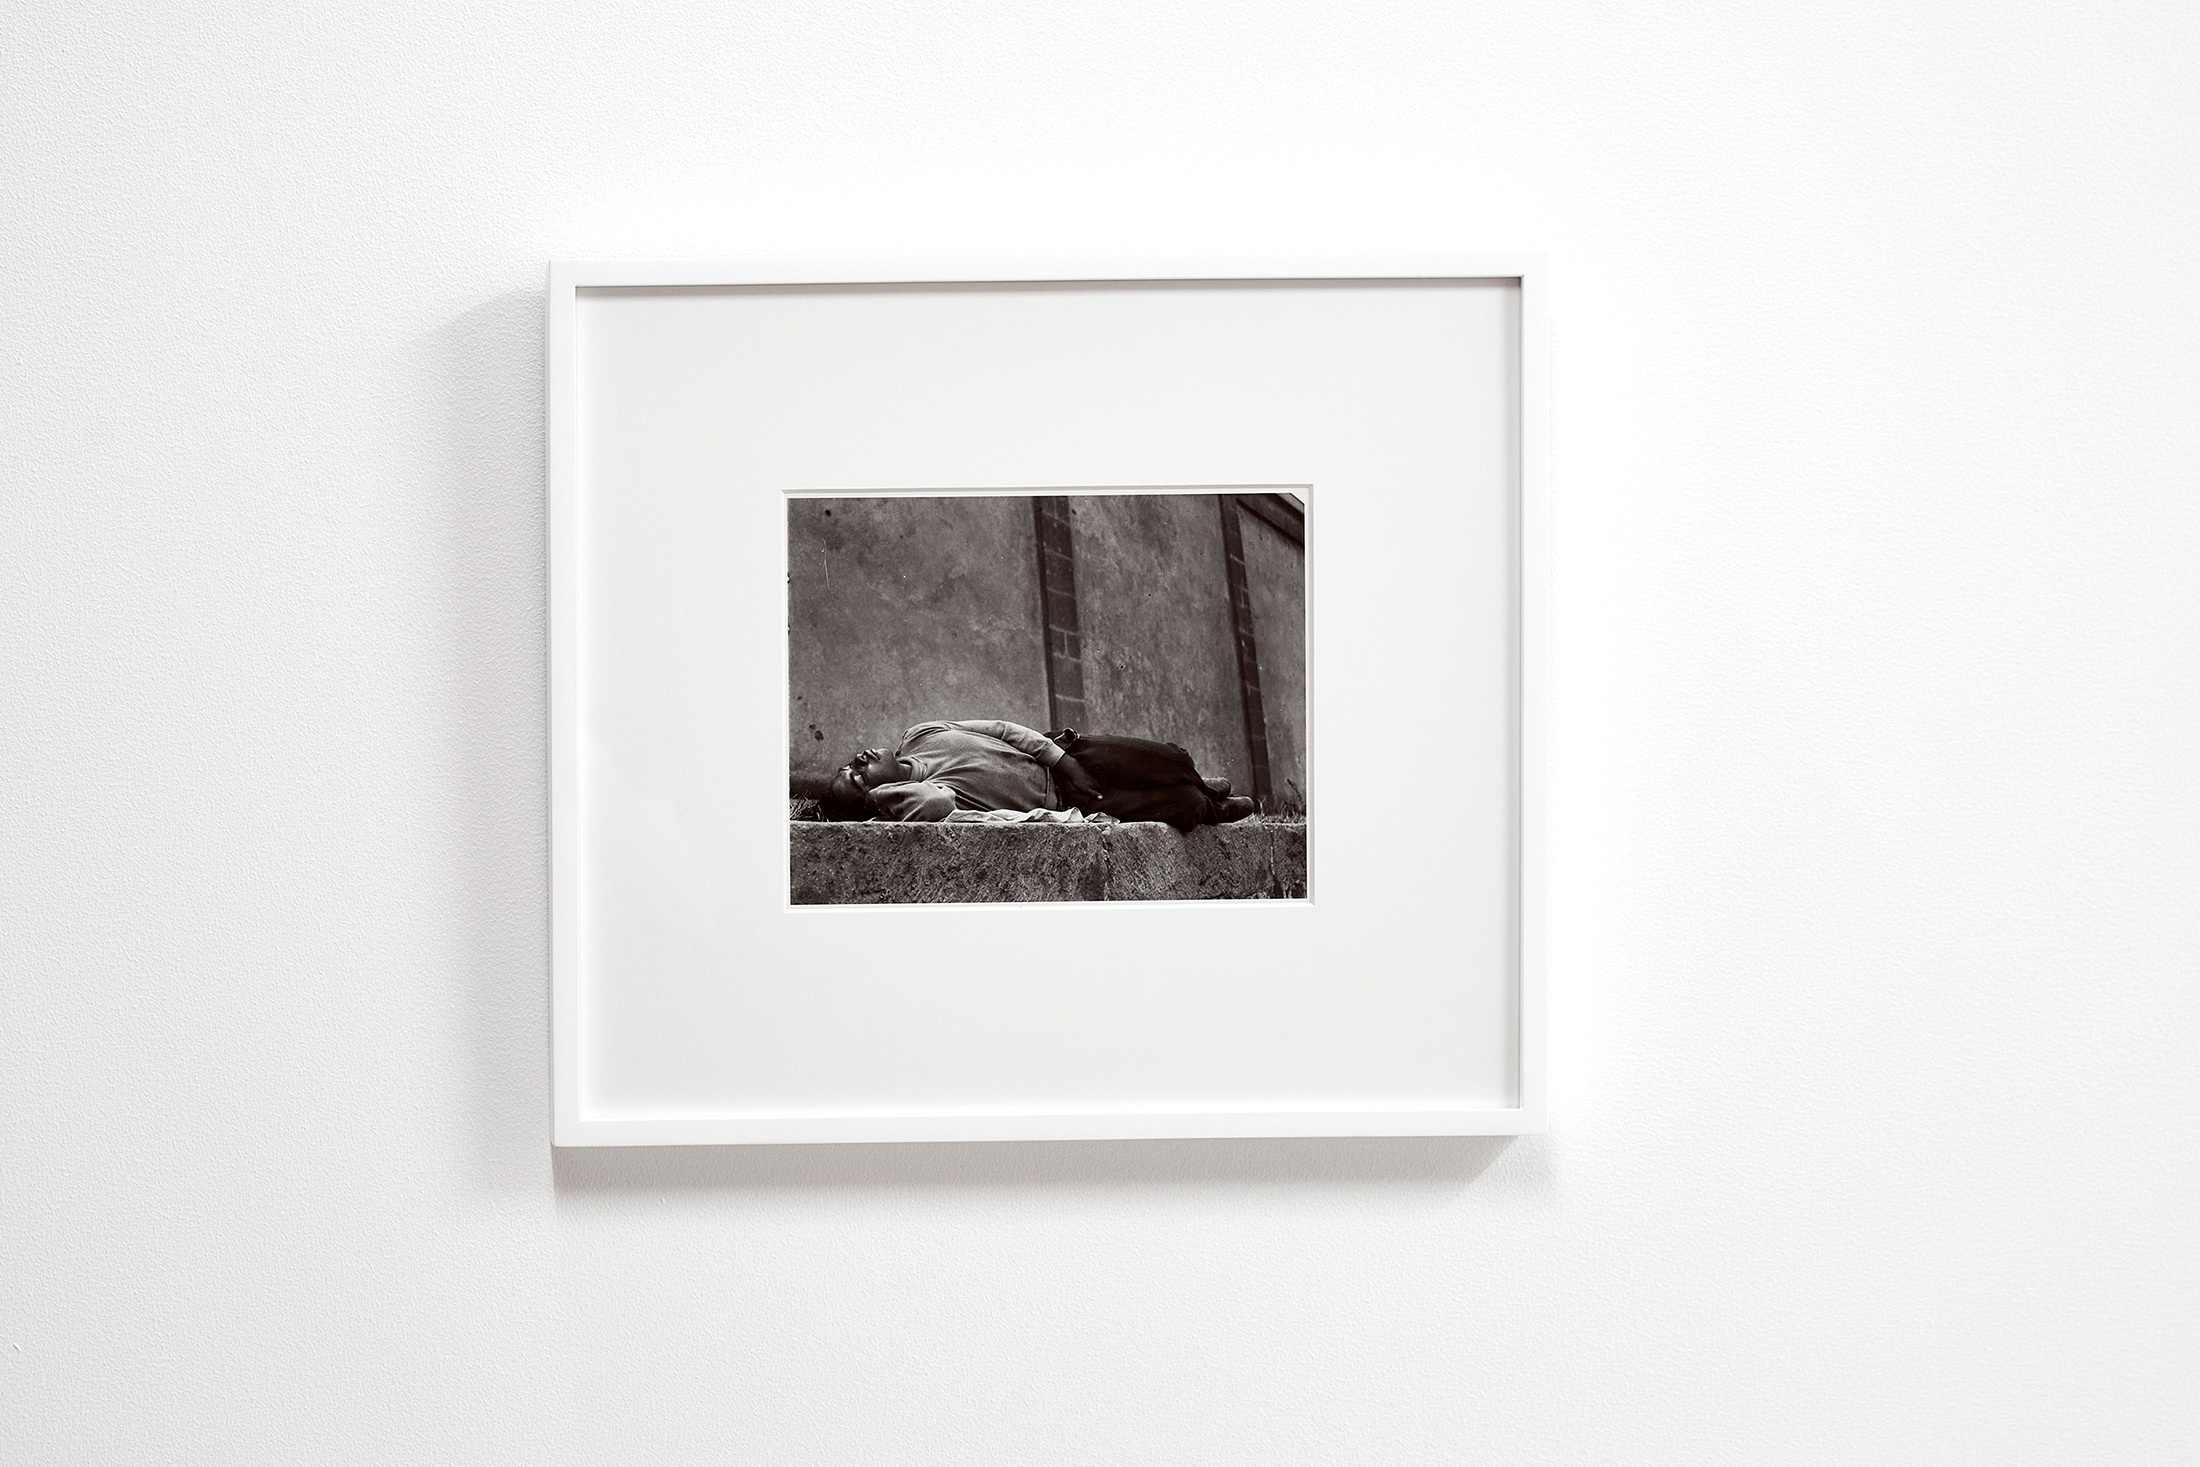 Installation photograph that shows Manuel Álvarez Bravo’s framed monochrome photograph 'El Soñador’ mounted on a white wall.
